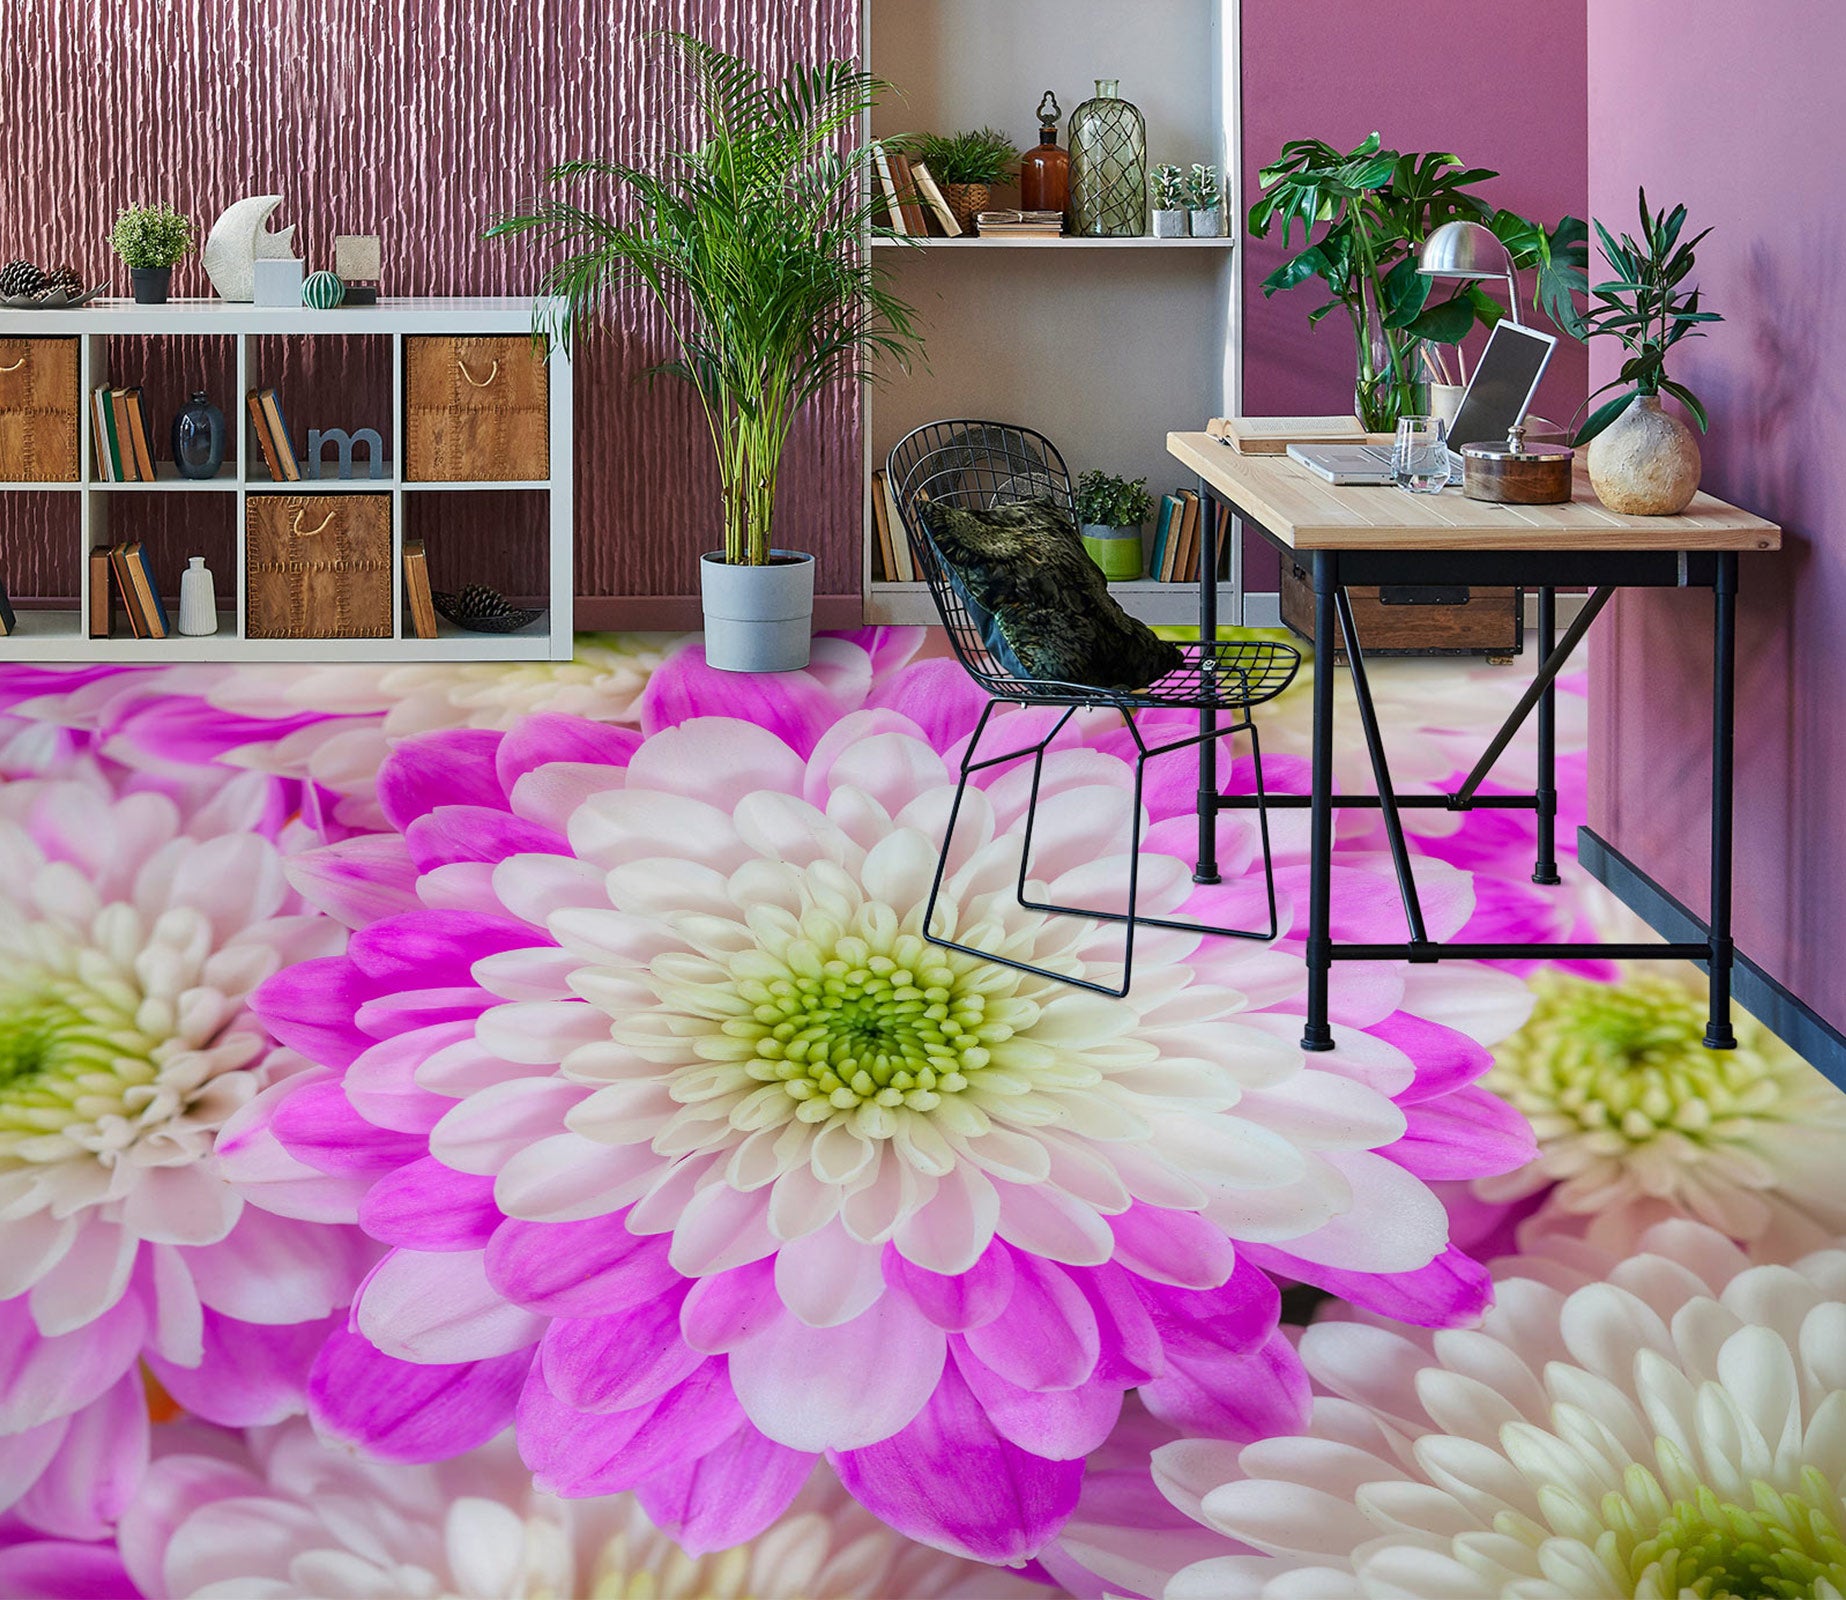 3D White Purple Chrysanthemum 9866 Assaf Frank Floor Mural  Wallpaper Murals Self-Adhesive Removable Print Epoxy